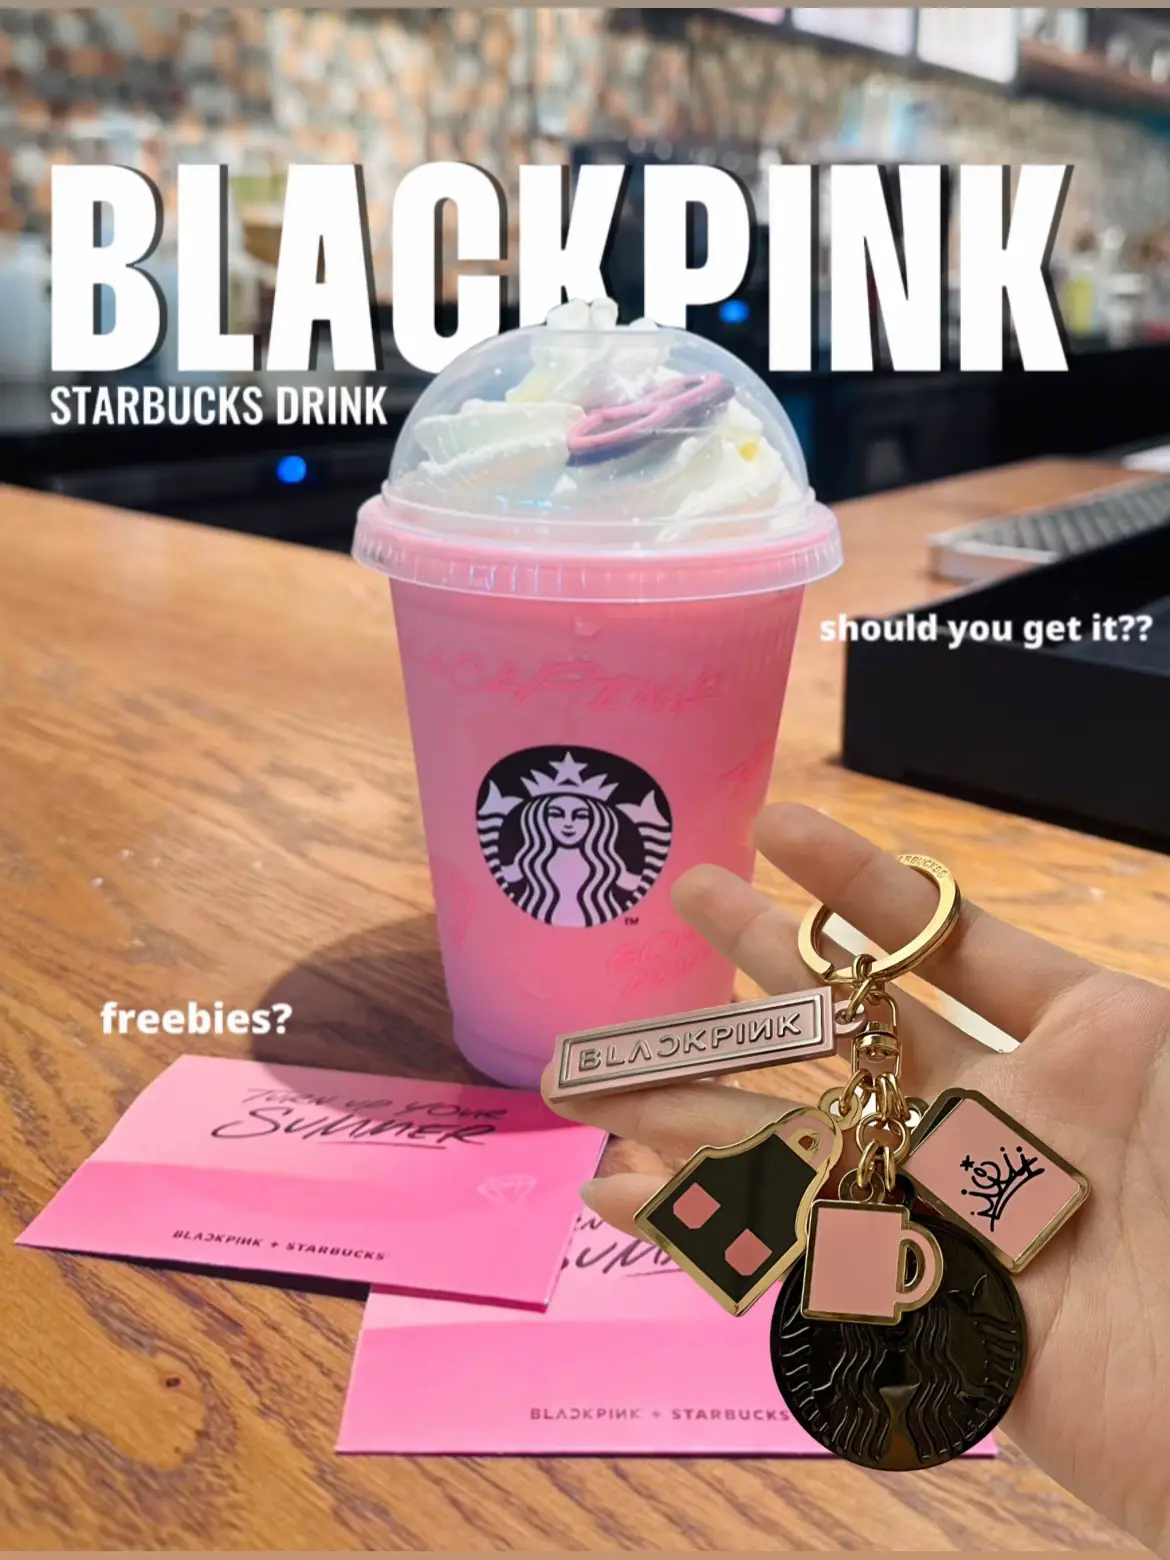 Starbucks and BLACKPINK launch exclusive merchandise in Thailand